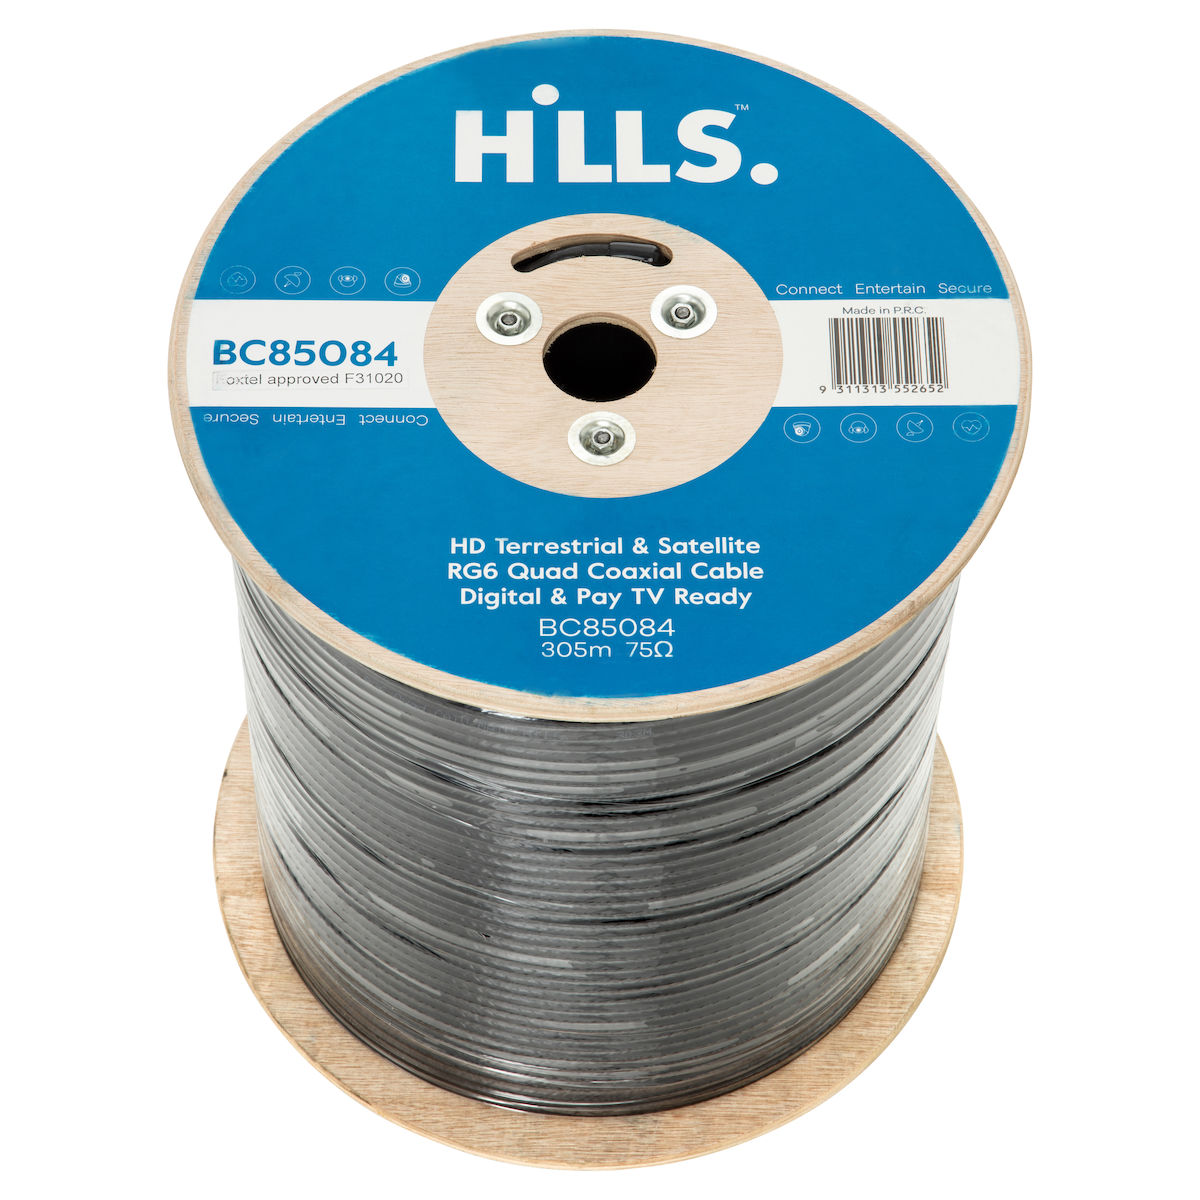 HILLS RG6 Quad Shield Foxtel Approved Cable 305m DRUM  - HILLS BC85084